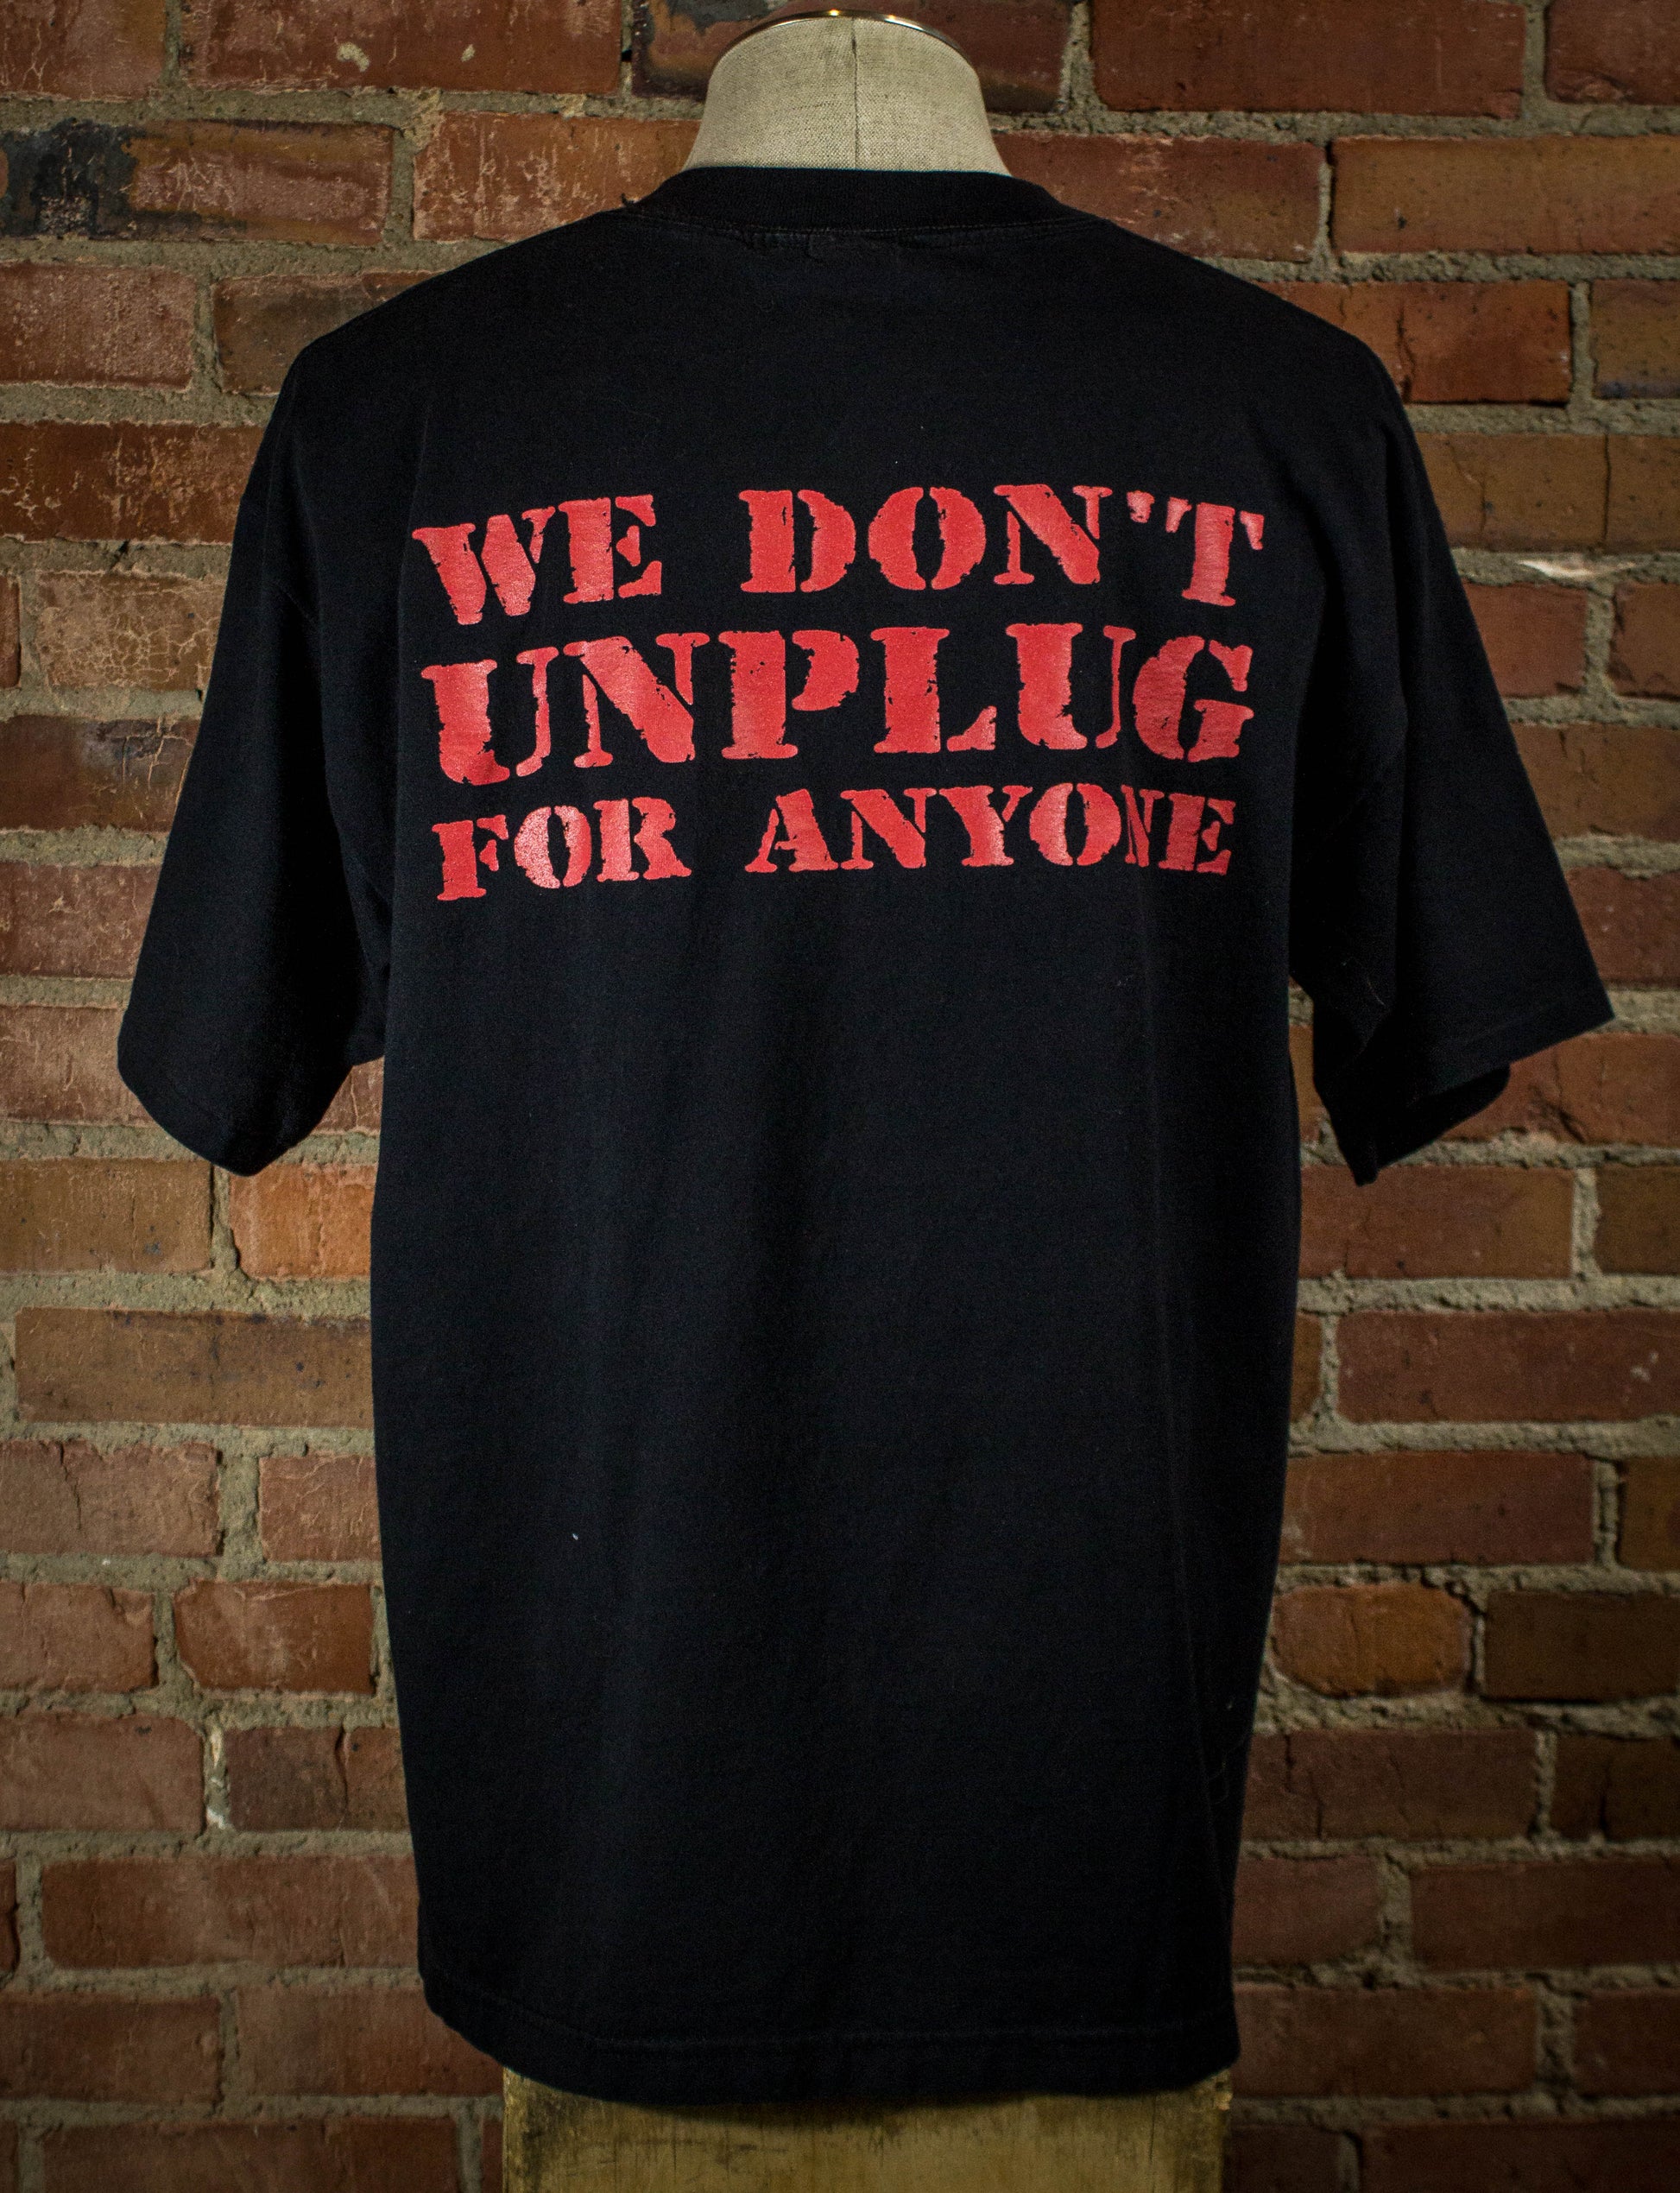 Vintage 1994 The Poor We Don't Unplug For Anyone Black Concert T Shirt Unisex XL